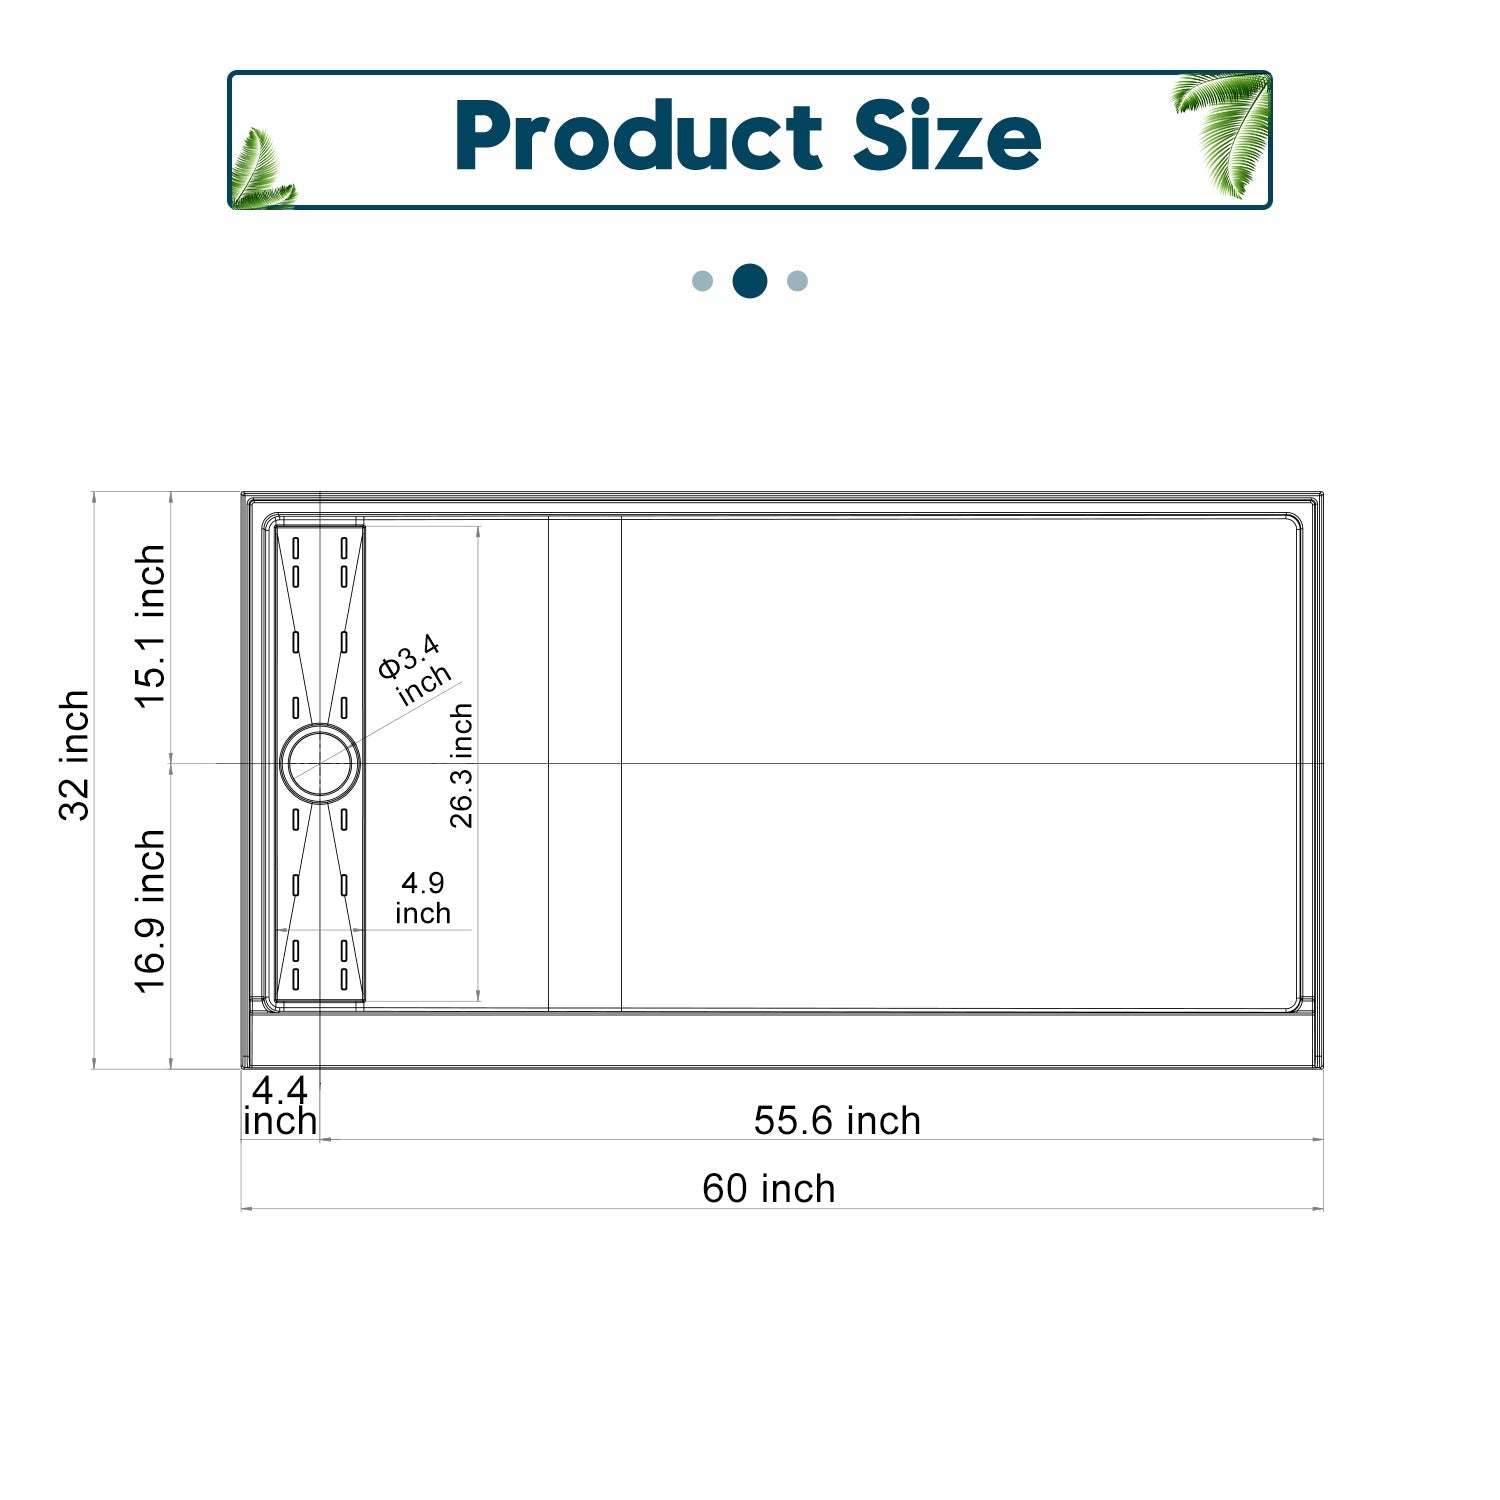 SL4U Shower Sheet Molding Compound(SMC) Shower Base for 60 x 32 Inch Shower Enclosure, Left Shower Drain Included, 32"D x 60"W x 4"H Shower Tray Base, White.